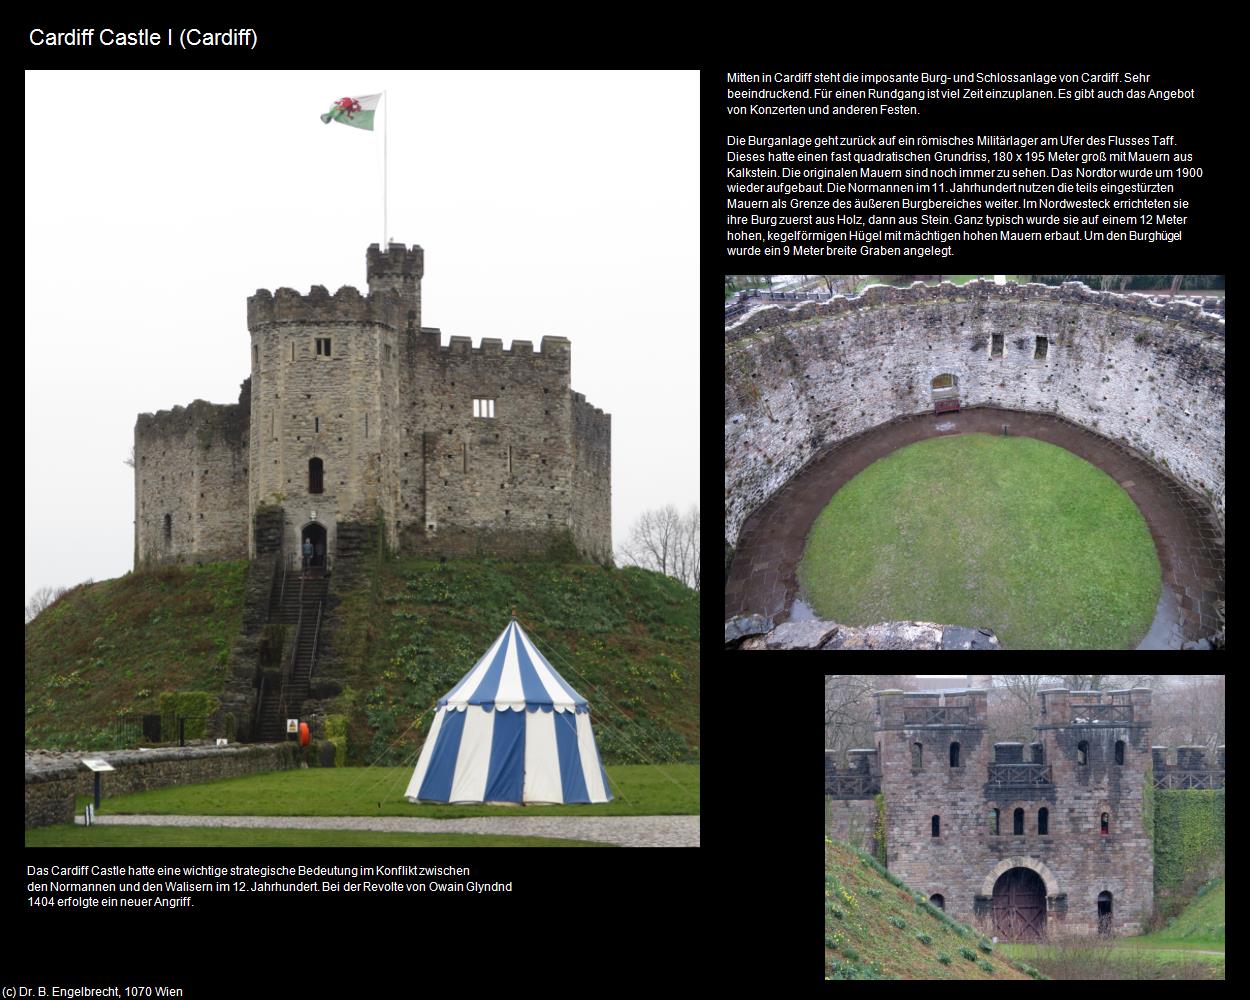 Cardiff Castle I (Cardiff, Wales) in Kulturatlas-ENGLAND und WALES